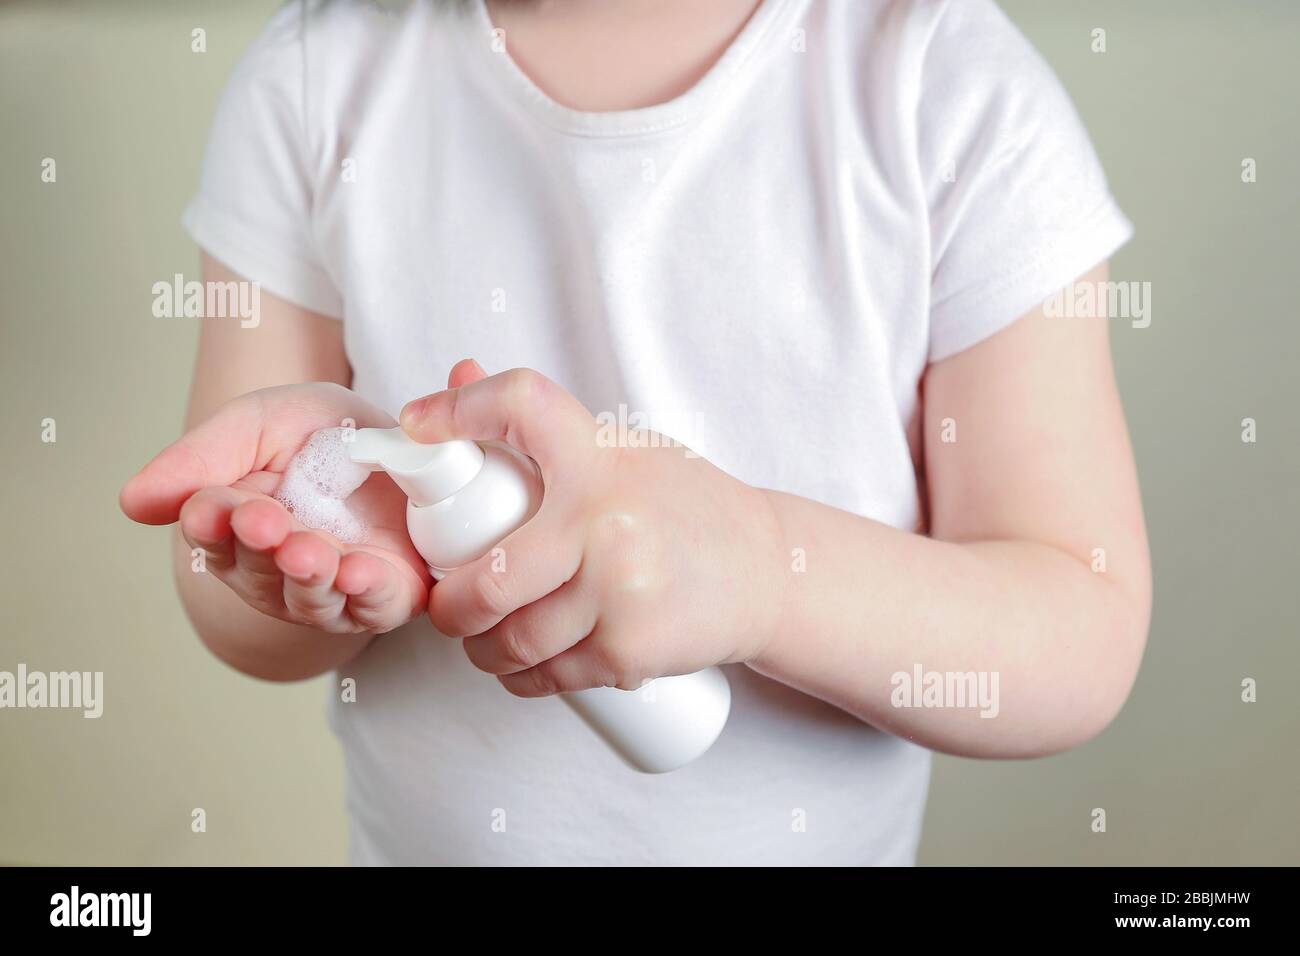 Child applying foam sanitizer on her hands. Stock Photo